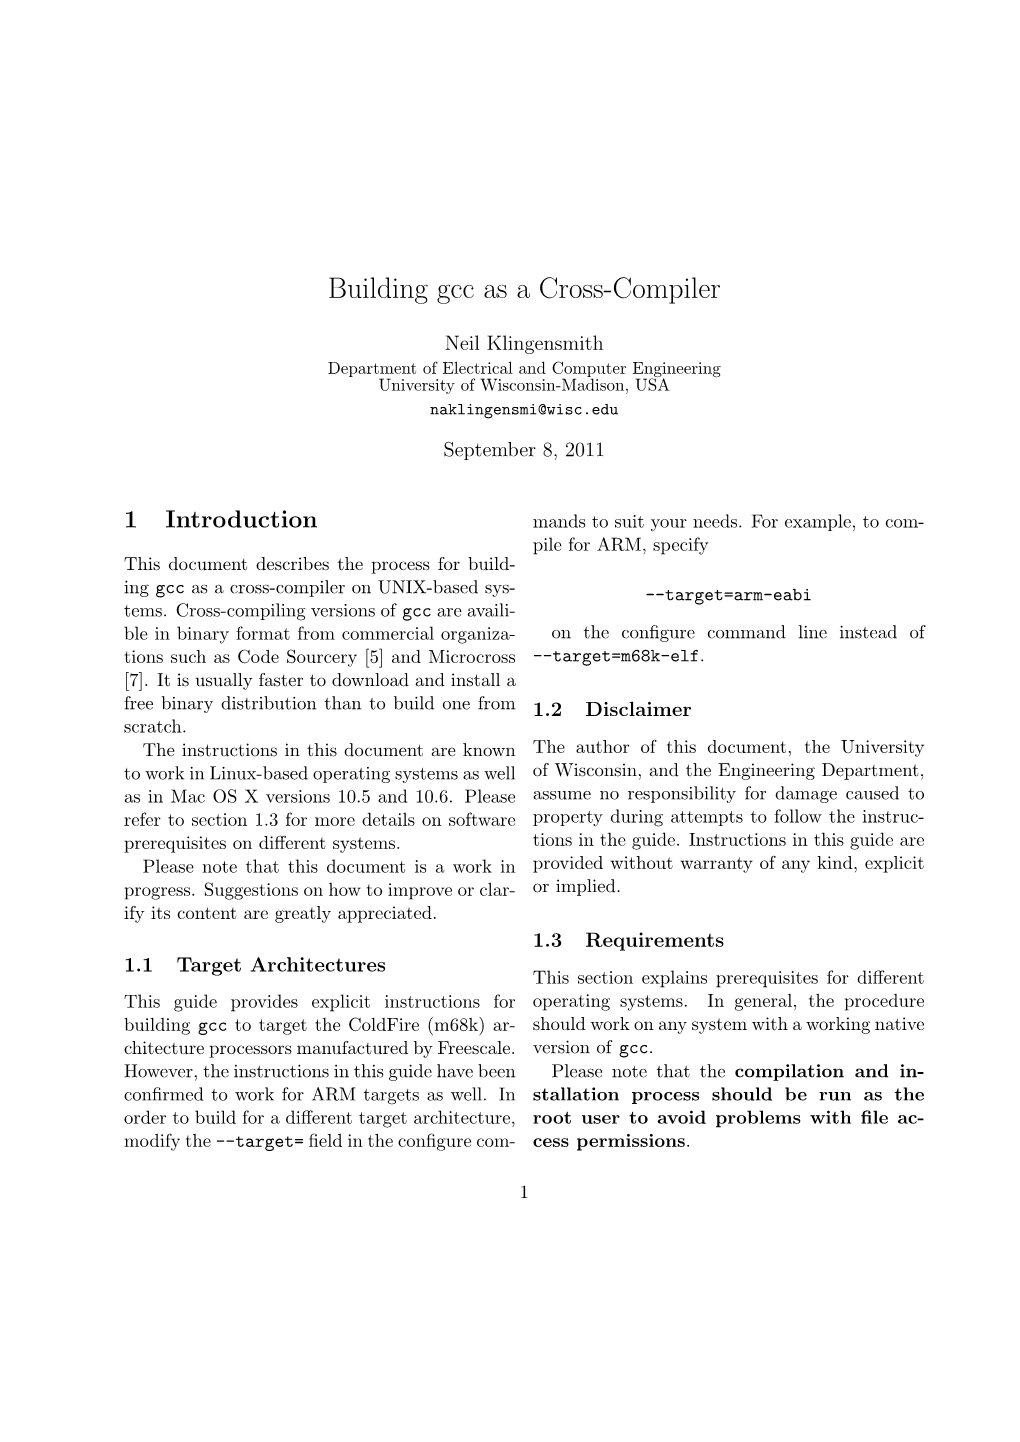 Building Gcc As a Cross-Compiler